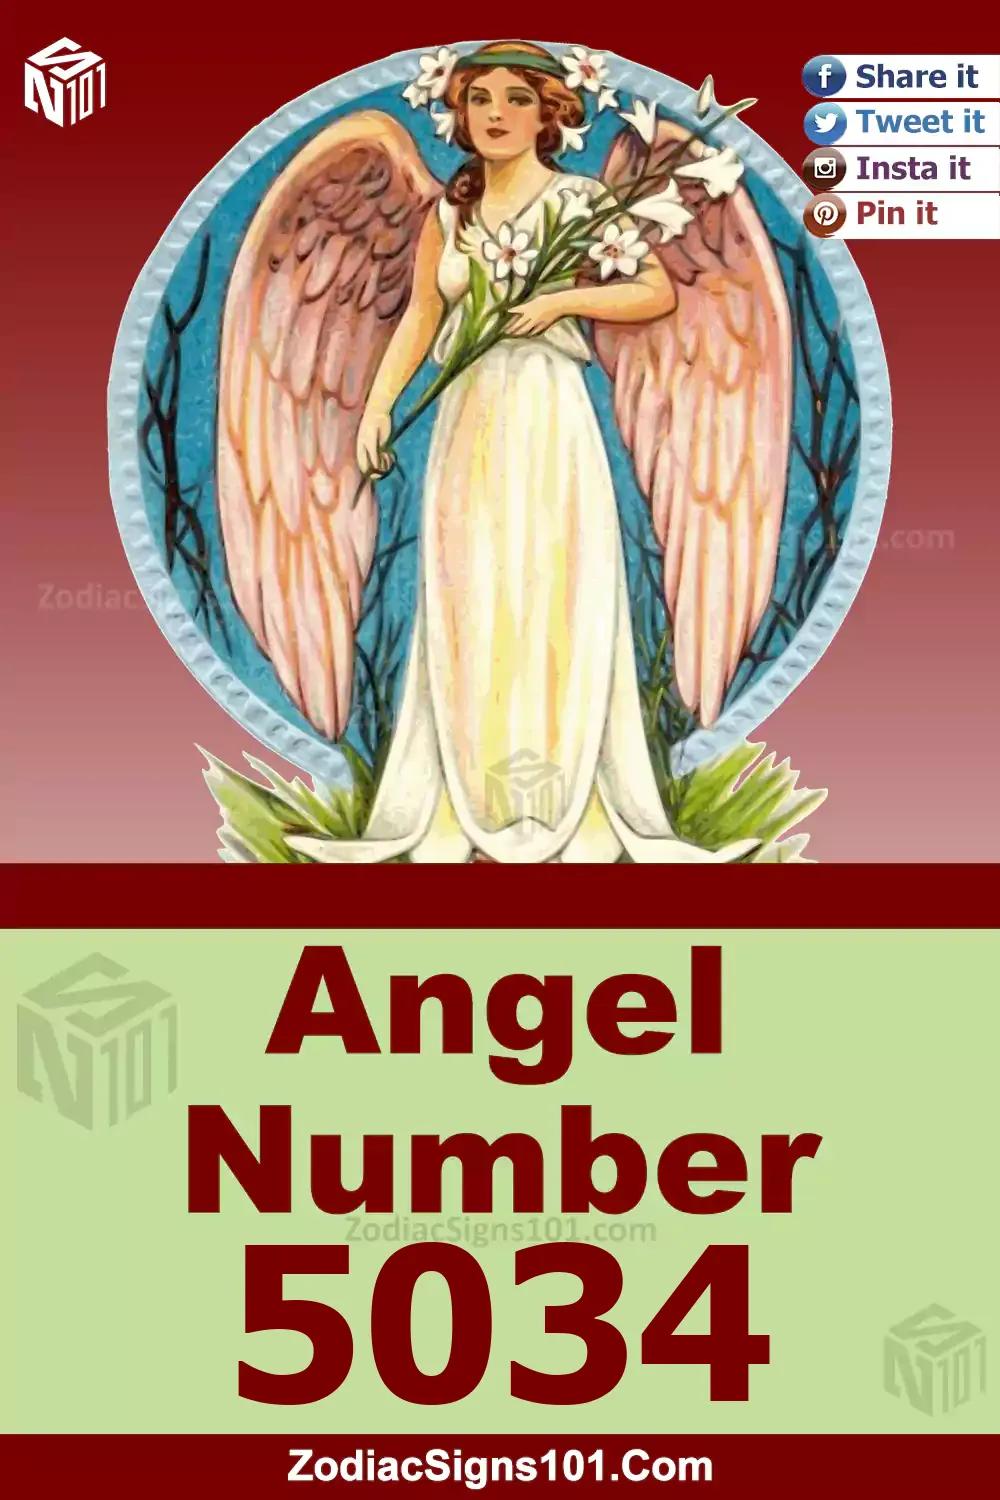 5034-Angel-Number-Meaning.jpg